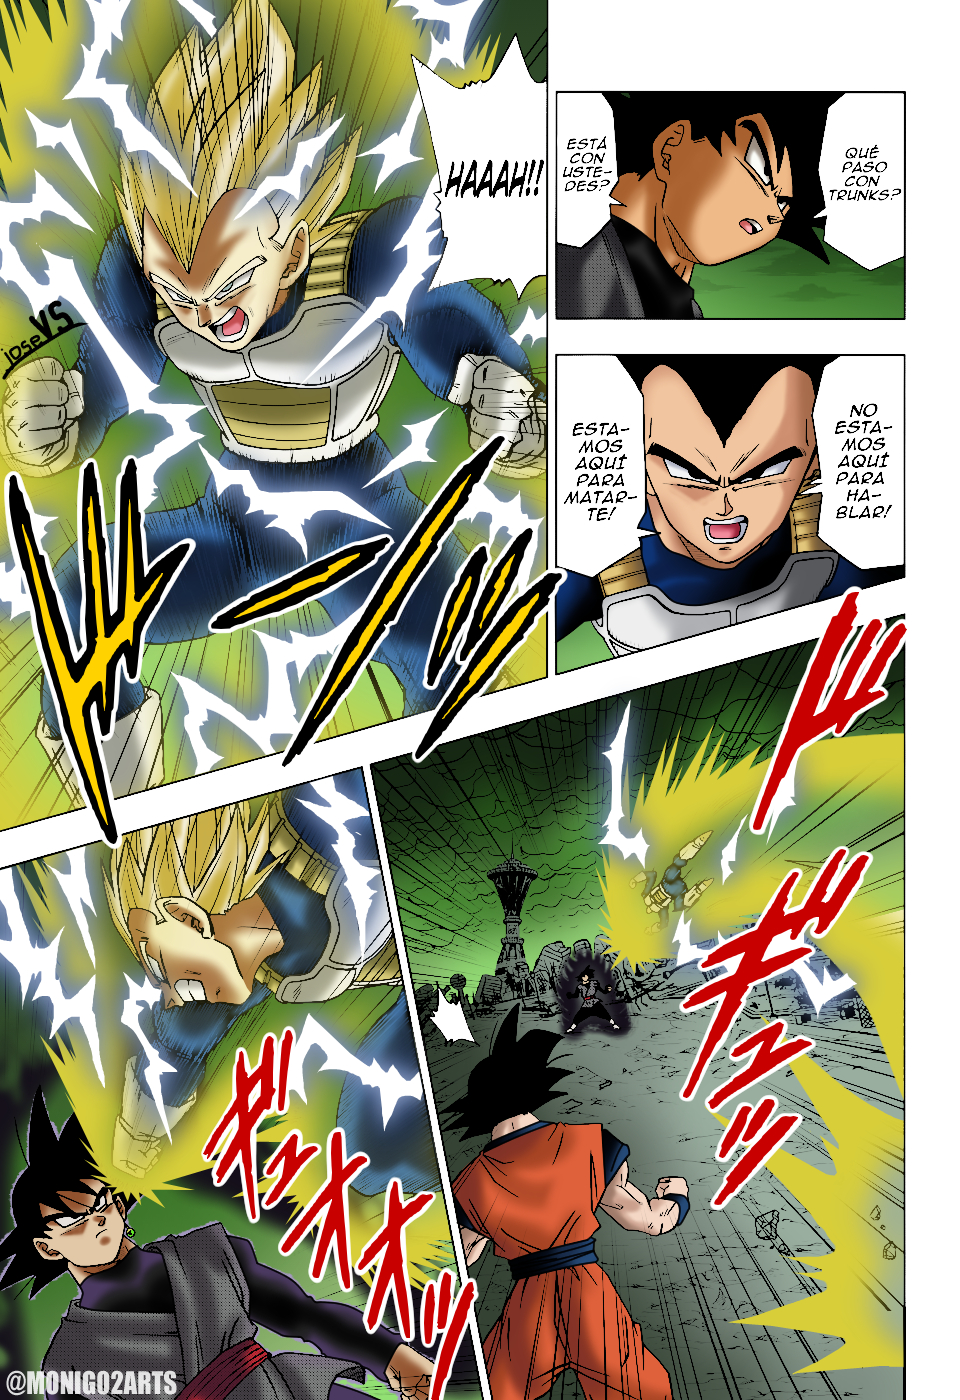 Manga 19 Vegeta SSJ2 VS Black Goku SSJ Complete by SenniN-GL-54 on  DeviantArt